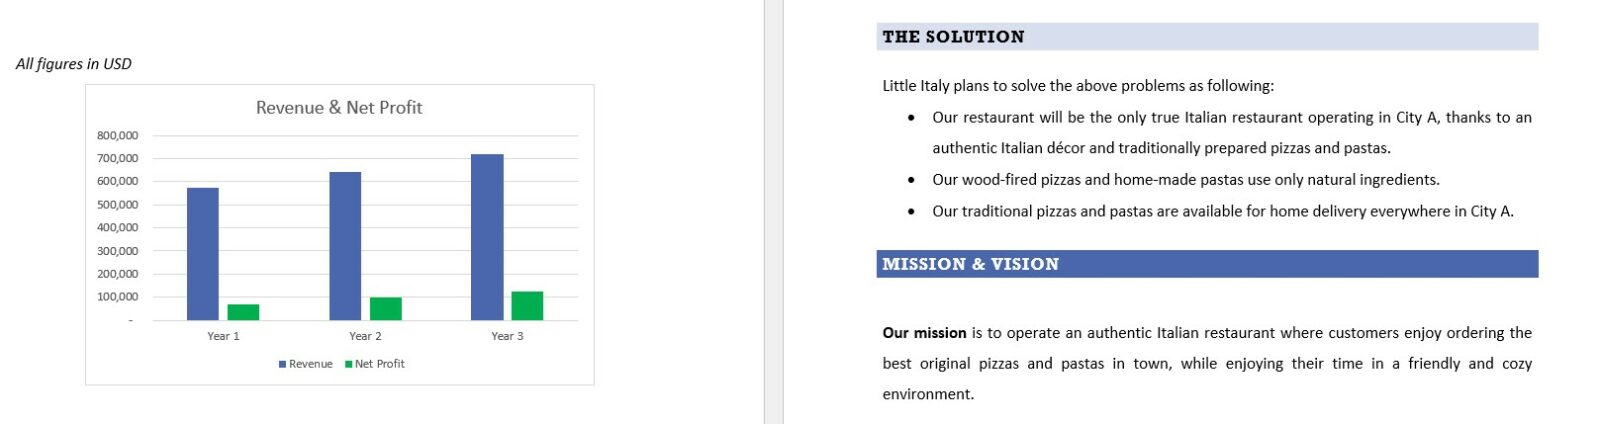 Italian restaurant business plan template in Word